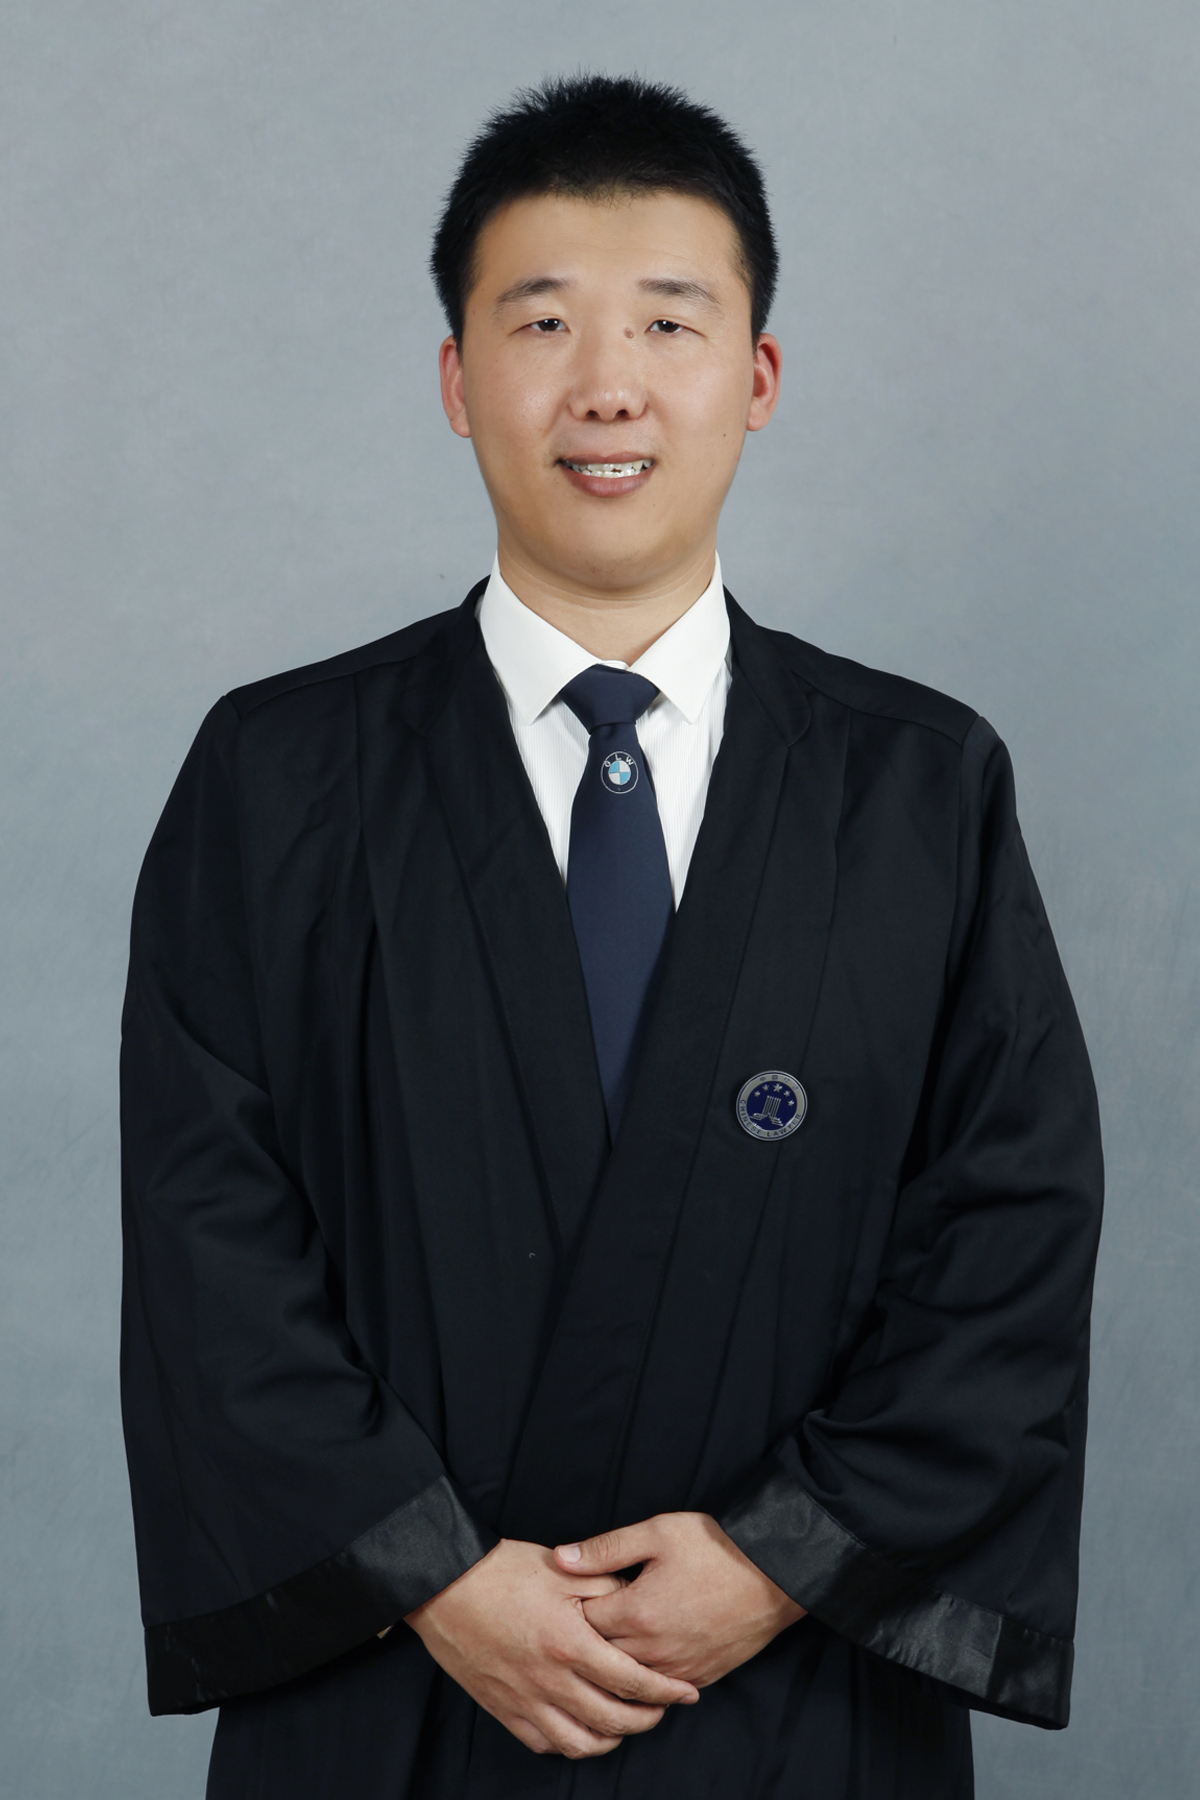 韩律师专职律师9